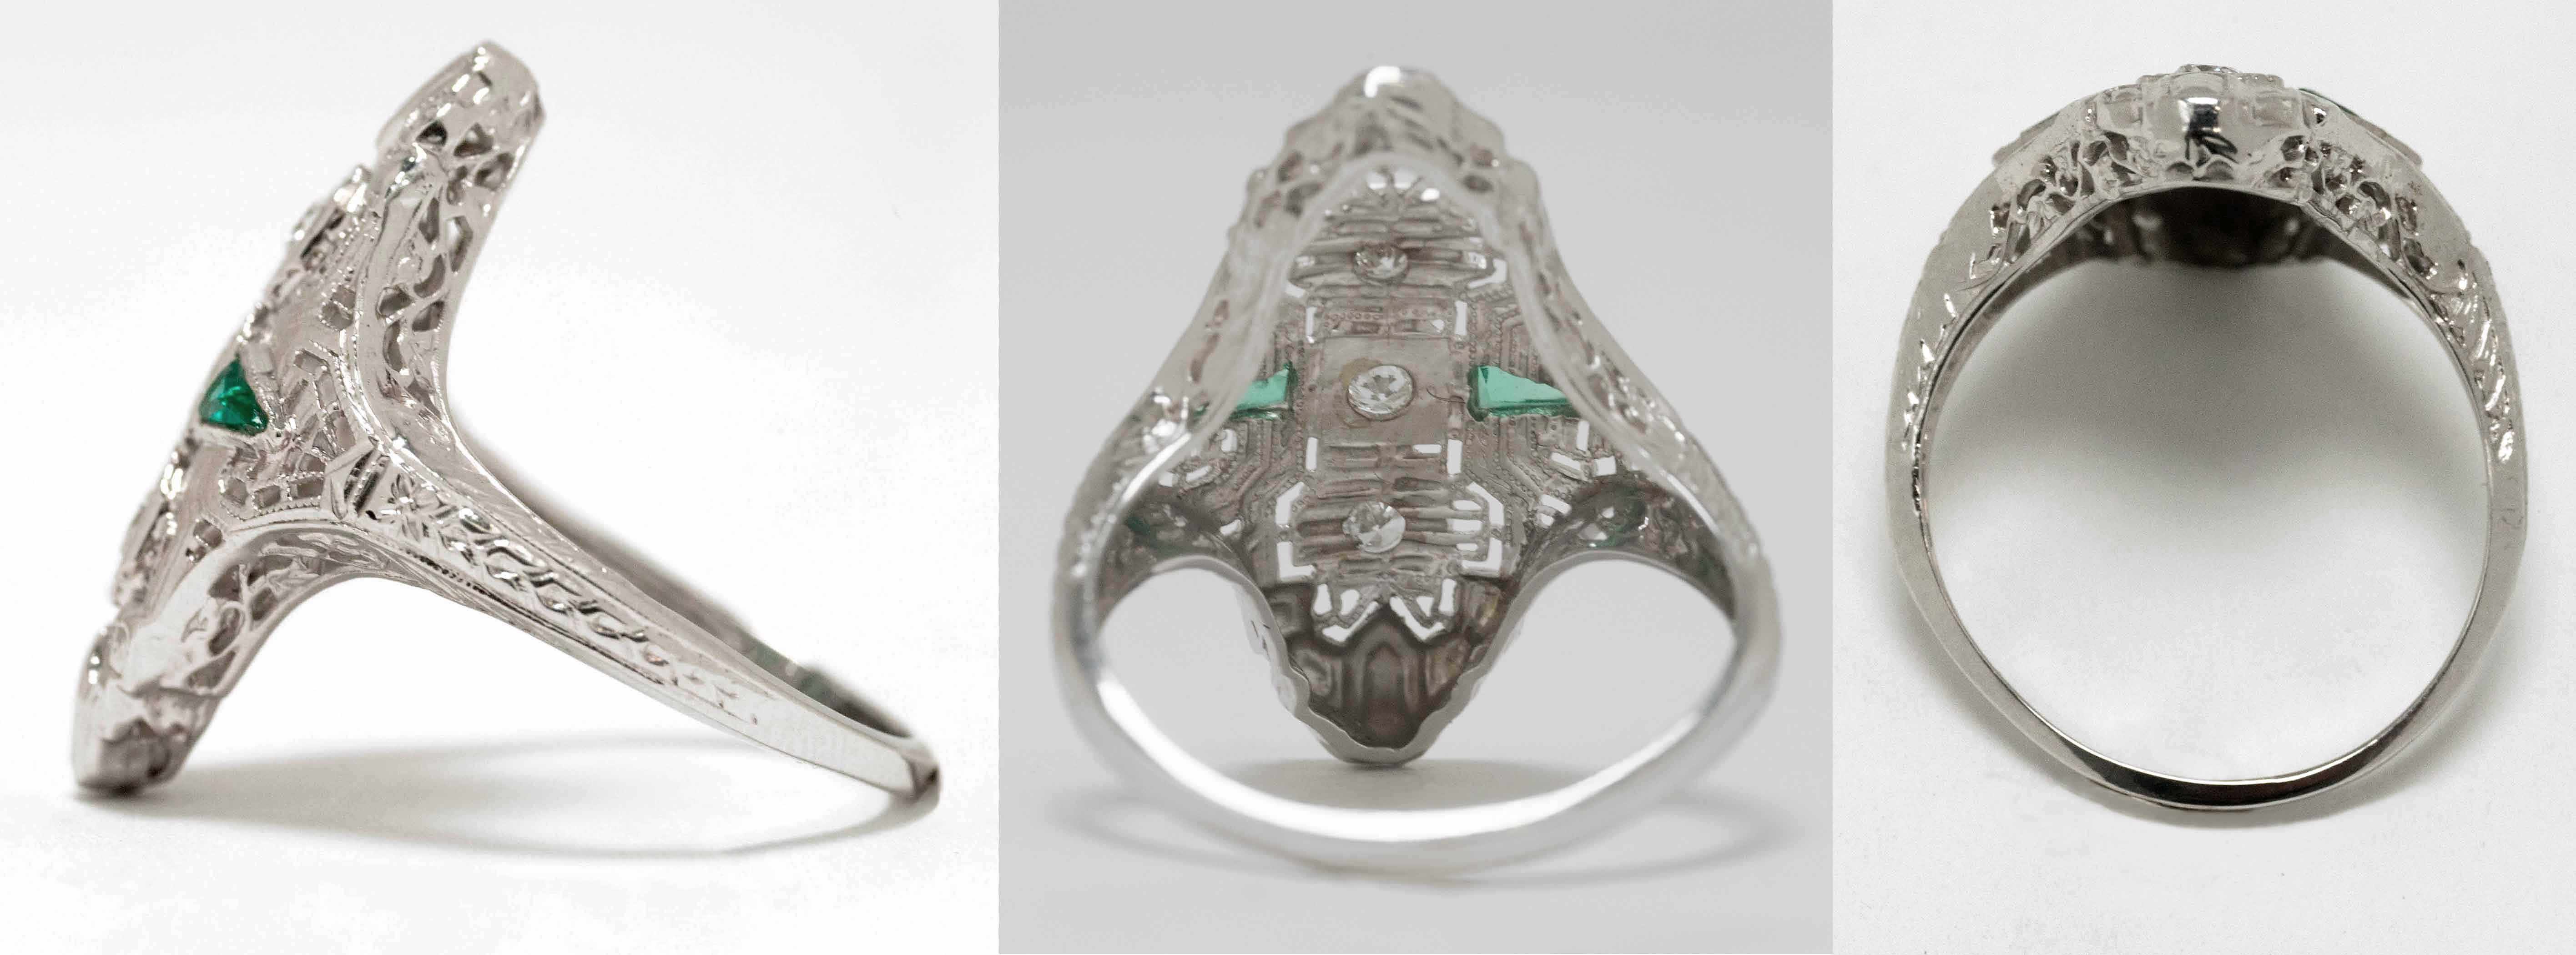 Art Deco Elongated Edwardian Style Filigree Diamond Cocktail Ring